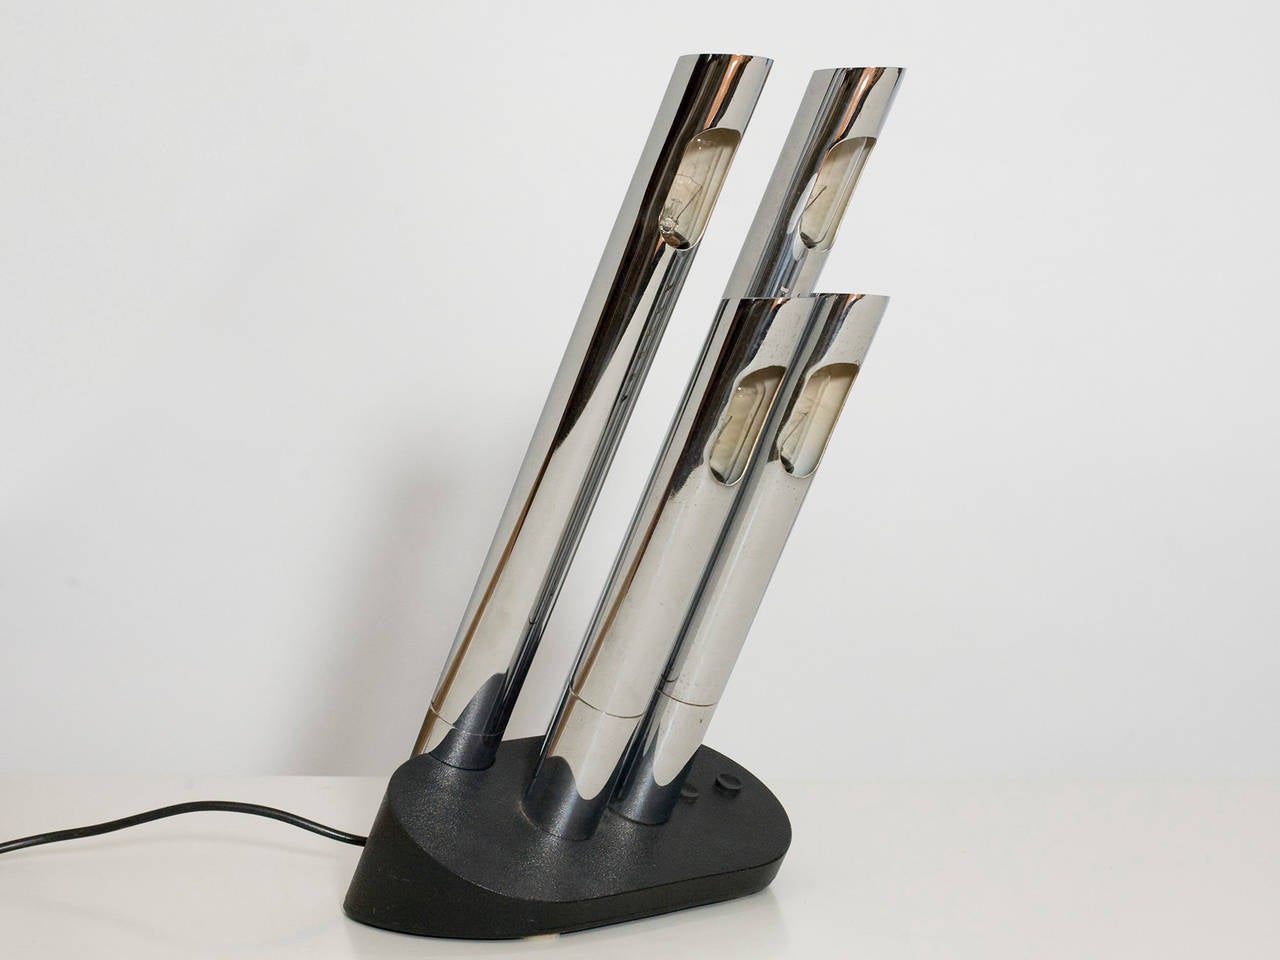 Italian Desk lamp by Mario Faggian for Luci 1969